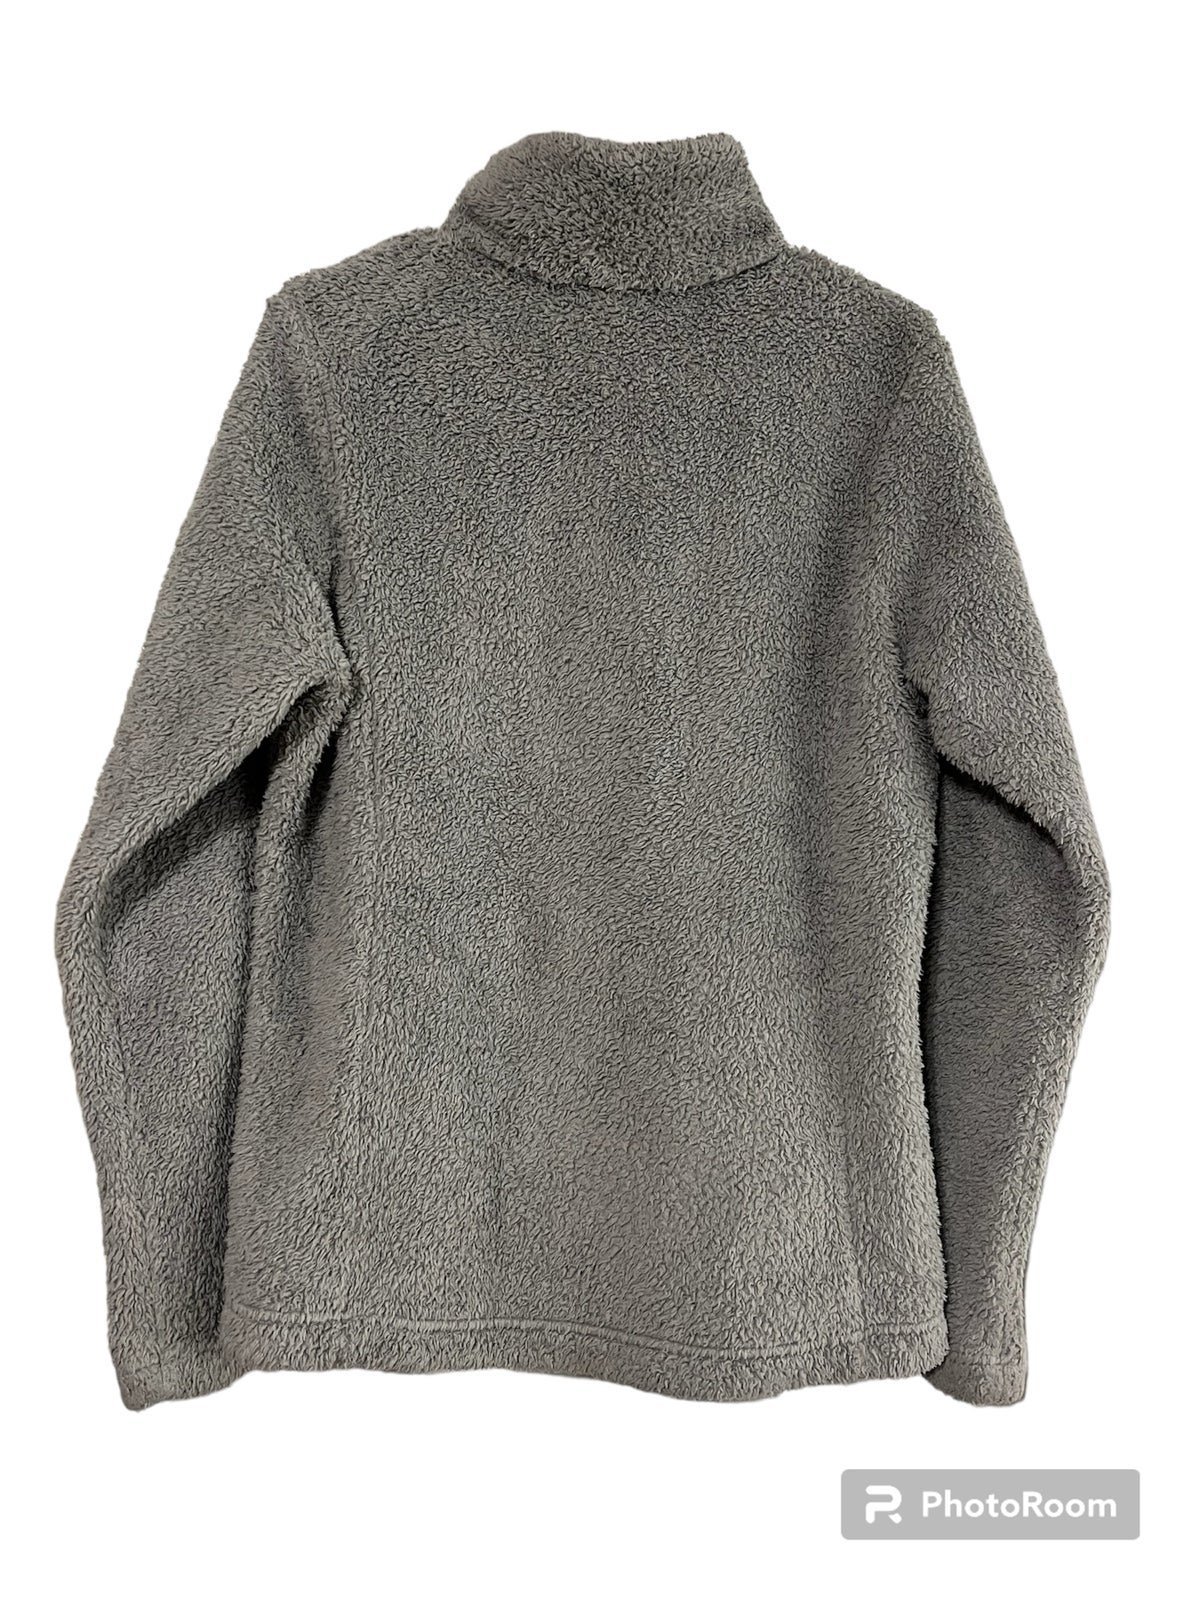 reasonable price Patagonia Los Gatos Fleece Jacket Womens Sz L in Gray 1/4 Zip Pullover EUC M0uelM0tU Store Online